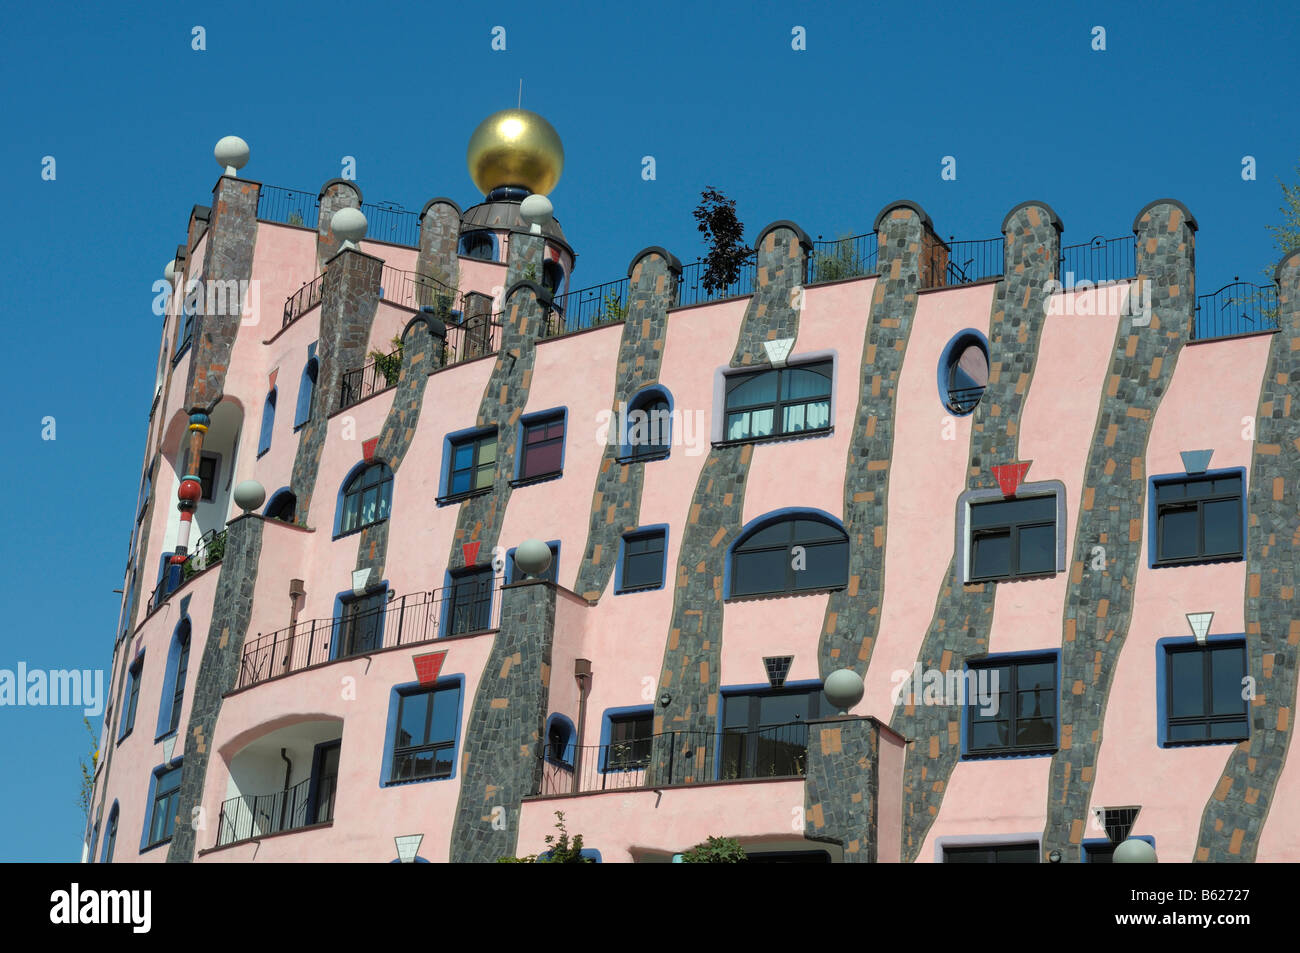 Green citadel, Hundertwasser house, Friedensreich Hundertwasser, Magdeburg, Saxony-Anhalt, Germany, Europe Stock Photo